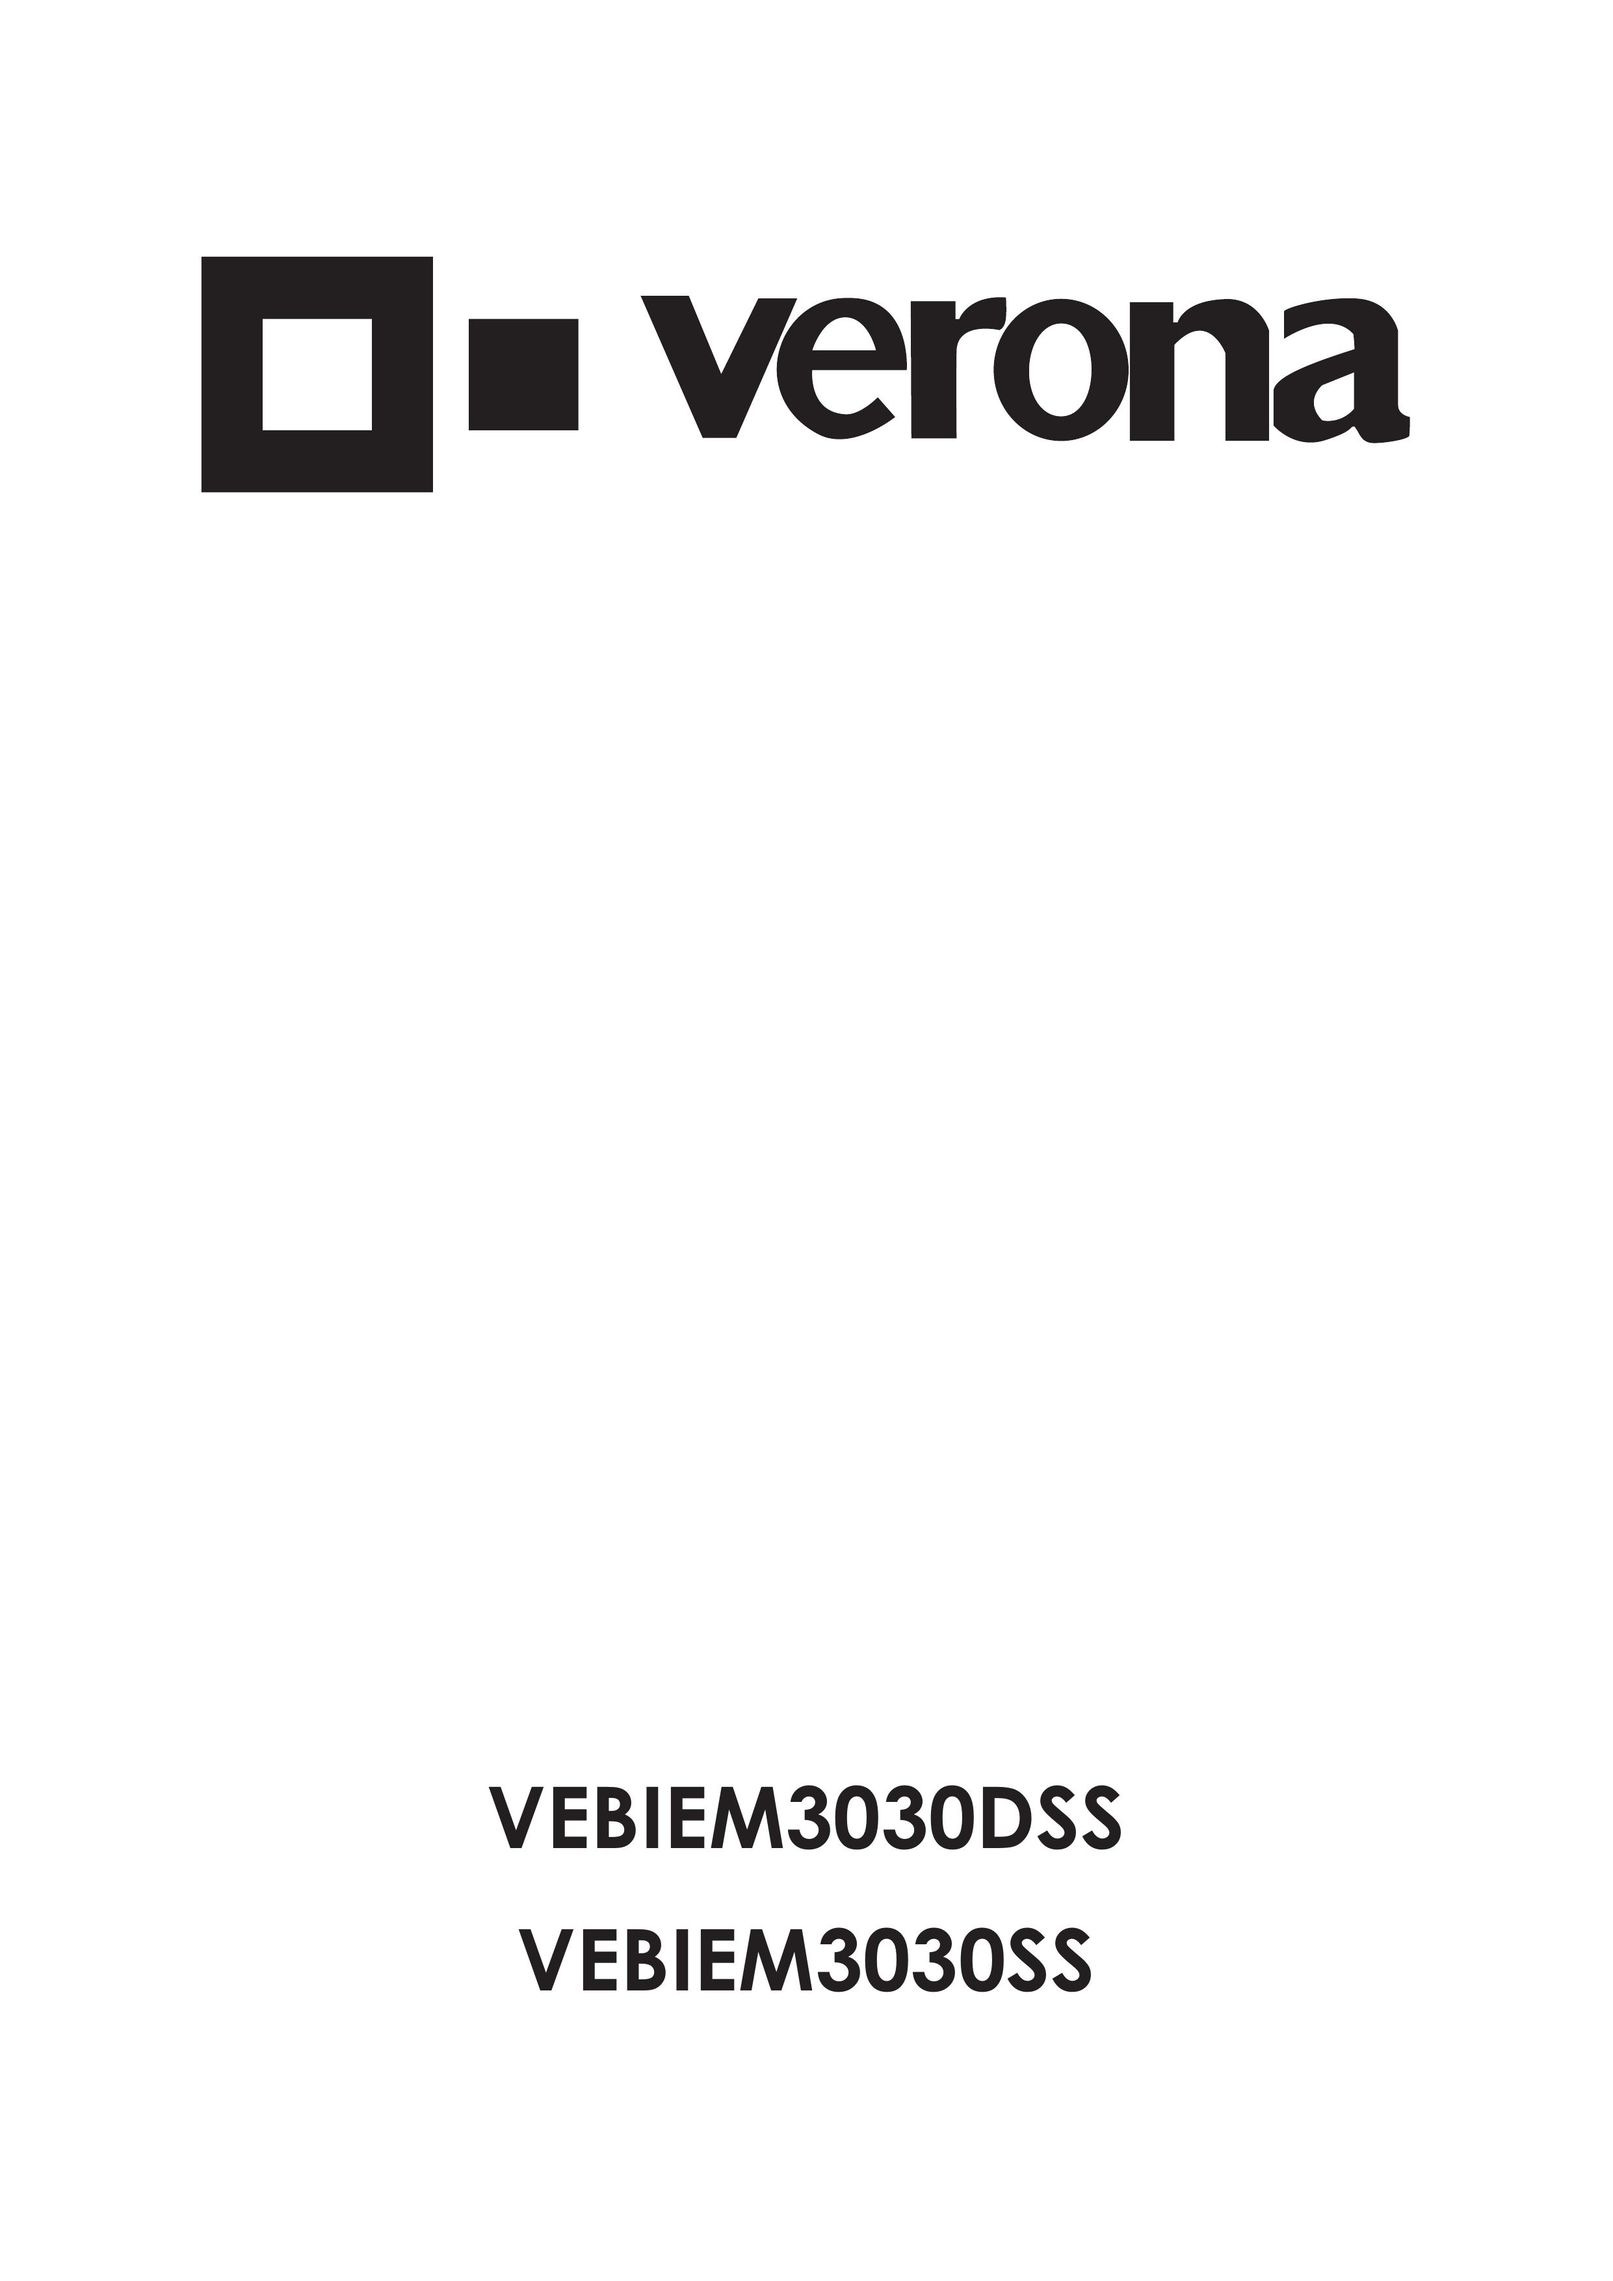 Verona VEBIEM3030DSS Convection Oven User Manual